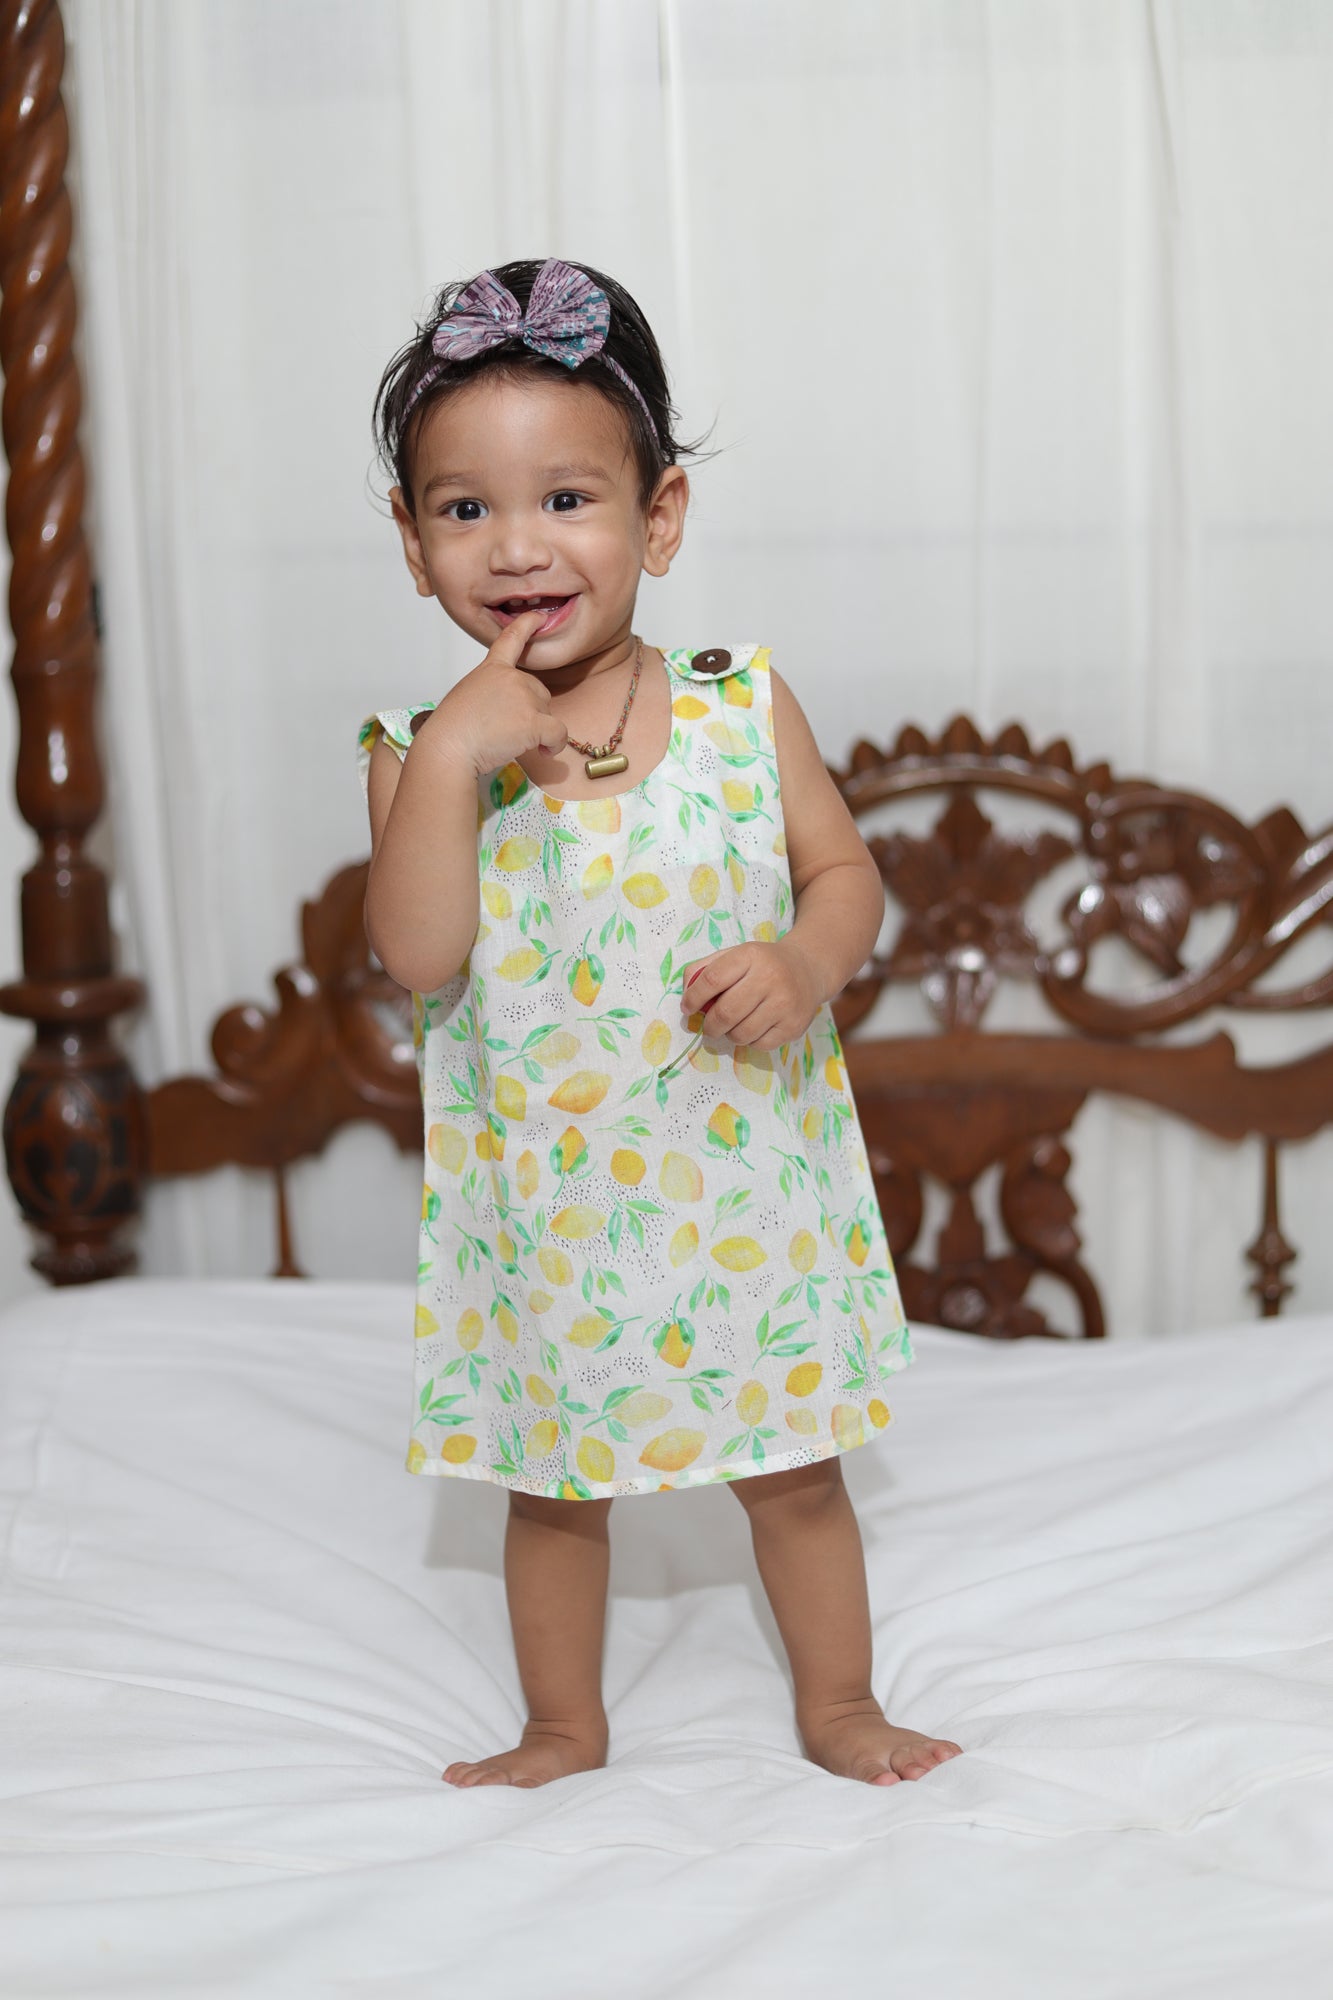 Dress Button Infant Girl Lemon Yellow